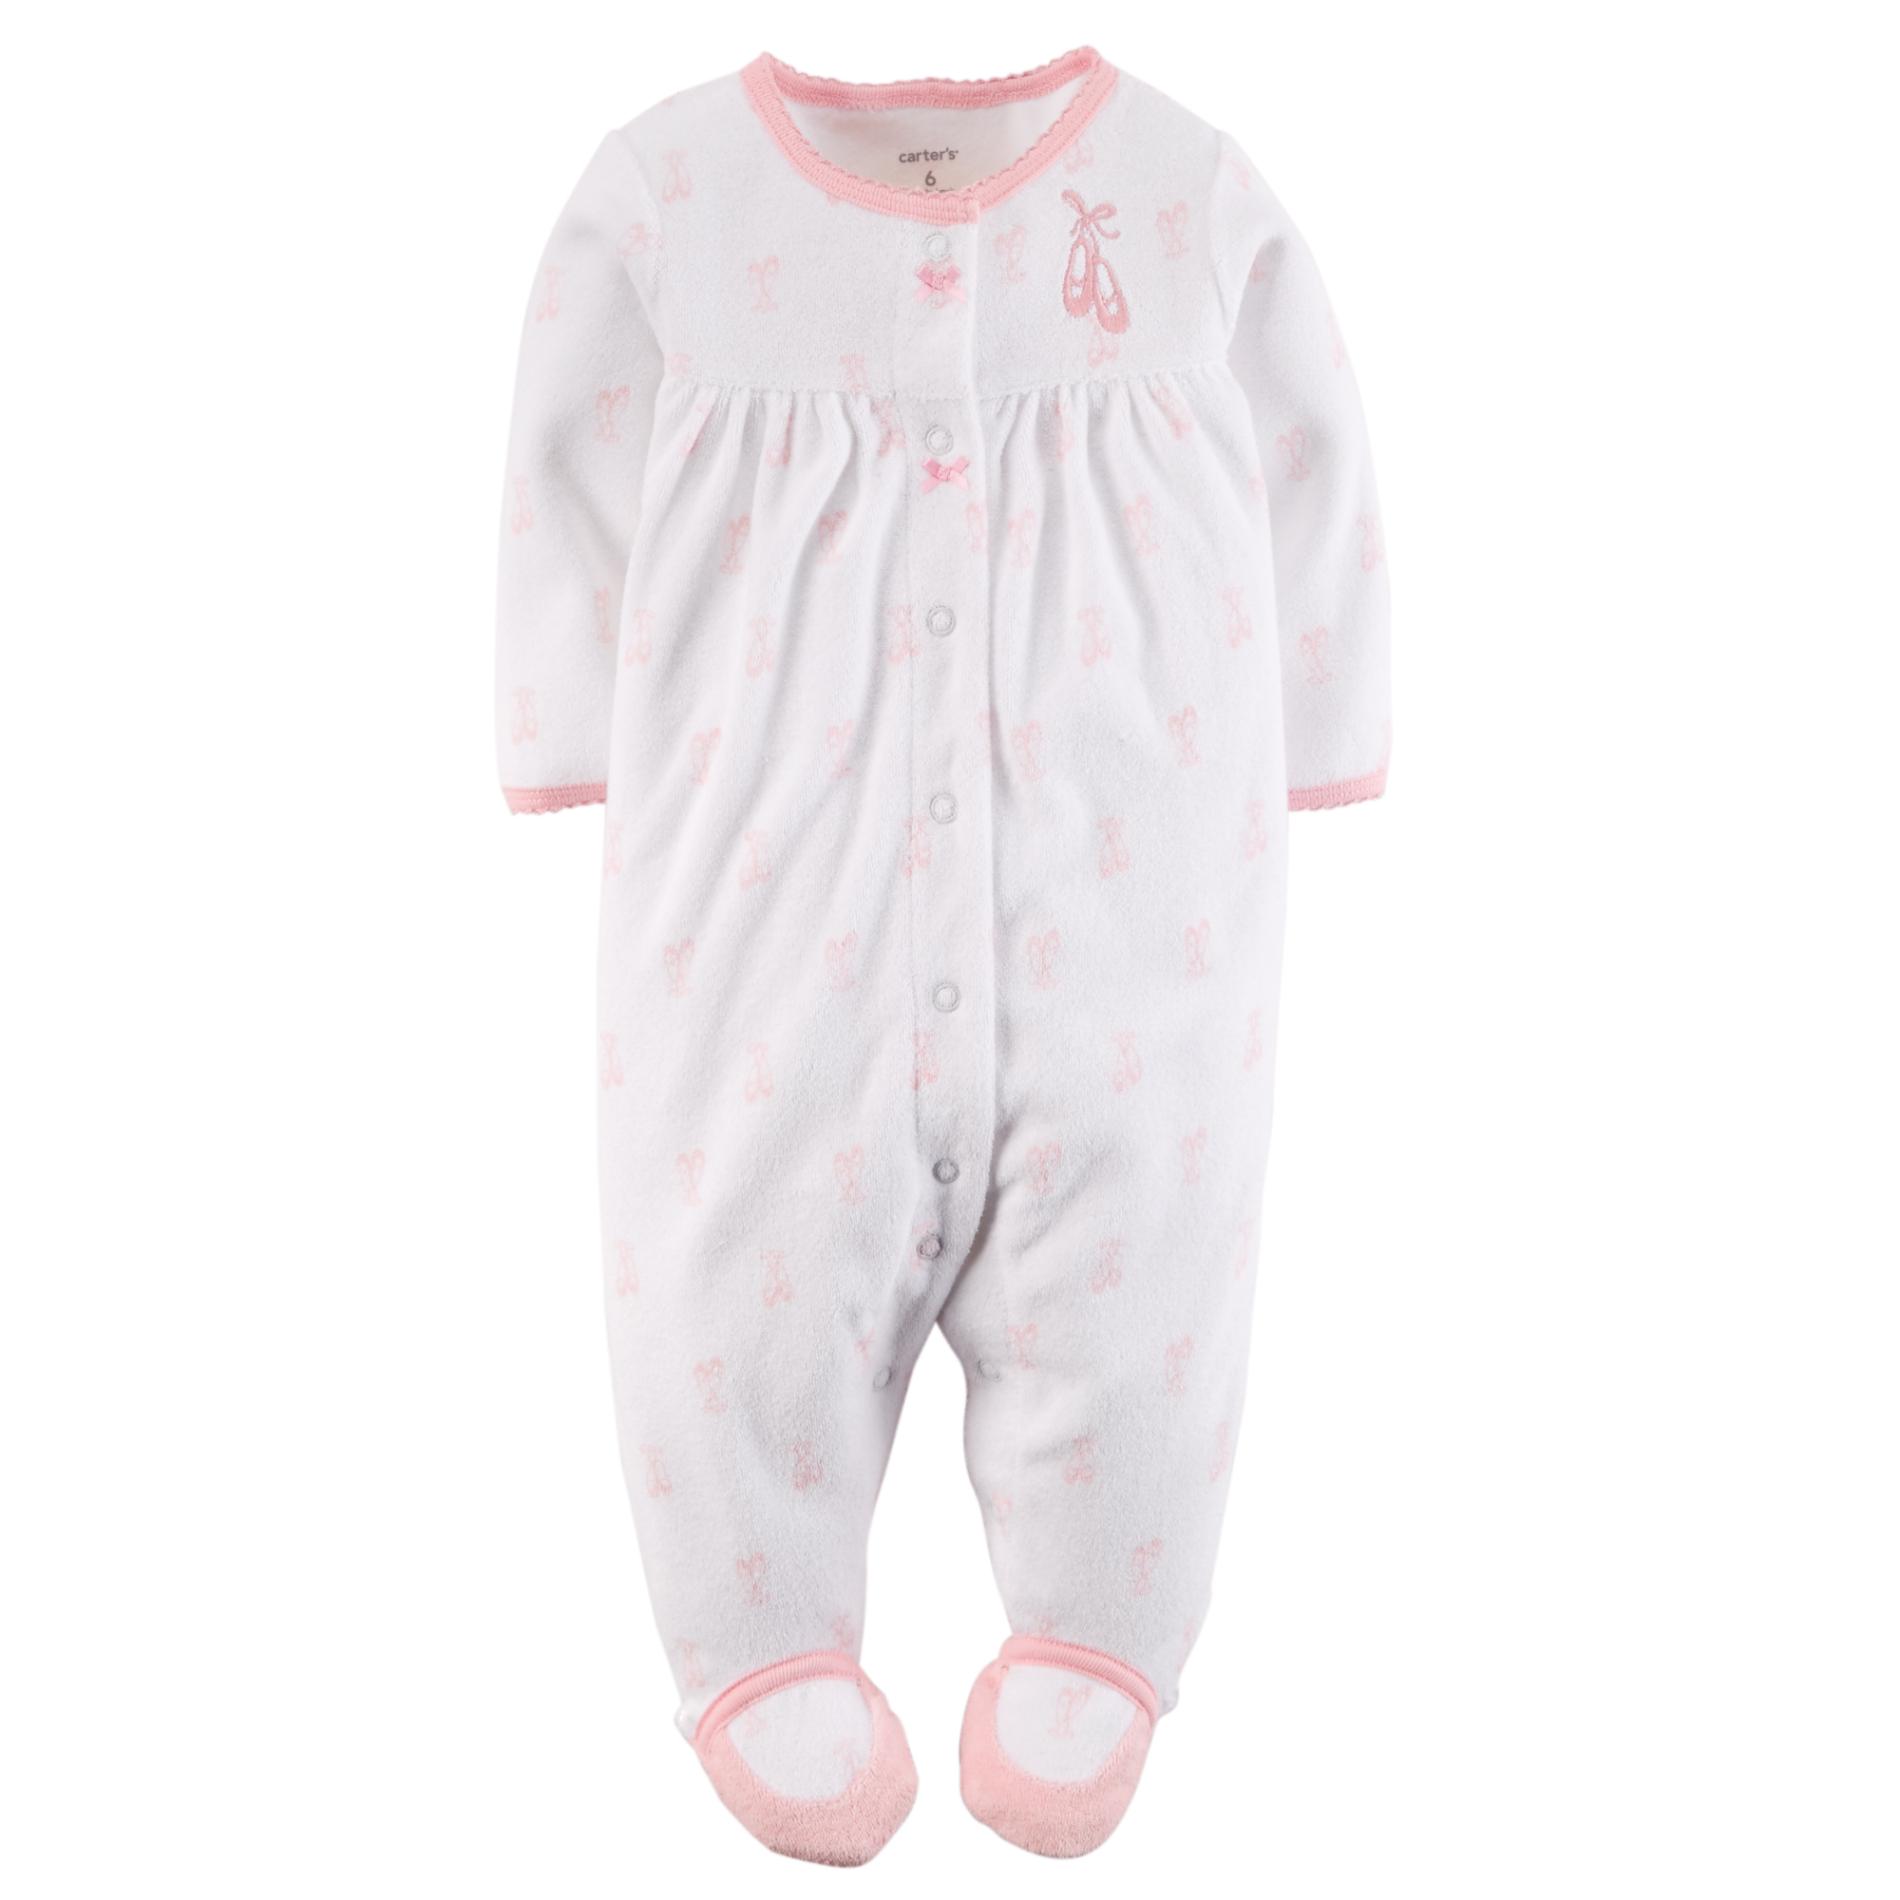 Carter's Newborn Girl's Terry Cloth Sleeper Pajamas - Ballerina